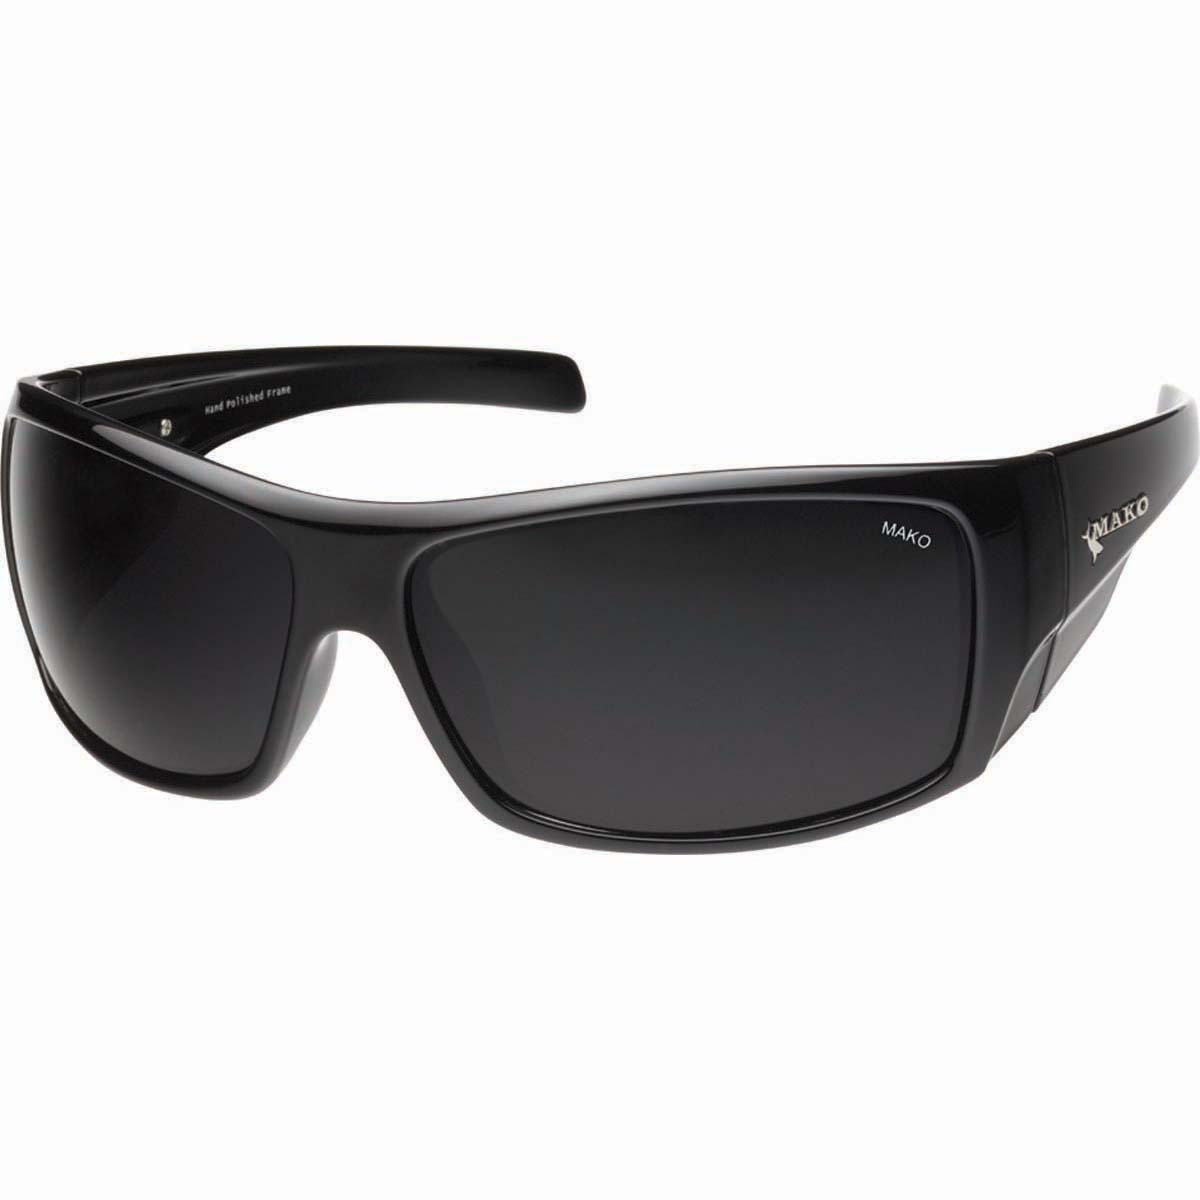 MAKO Indestructible Polarised Sunglasses with Grey Lens